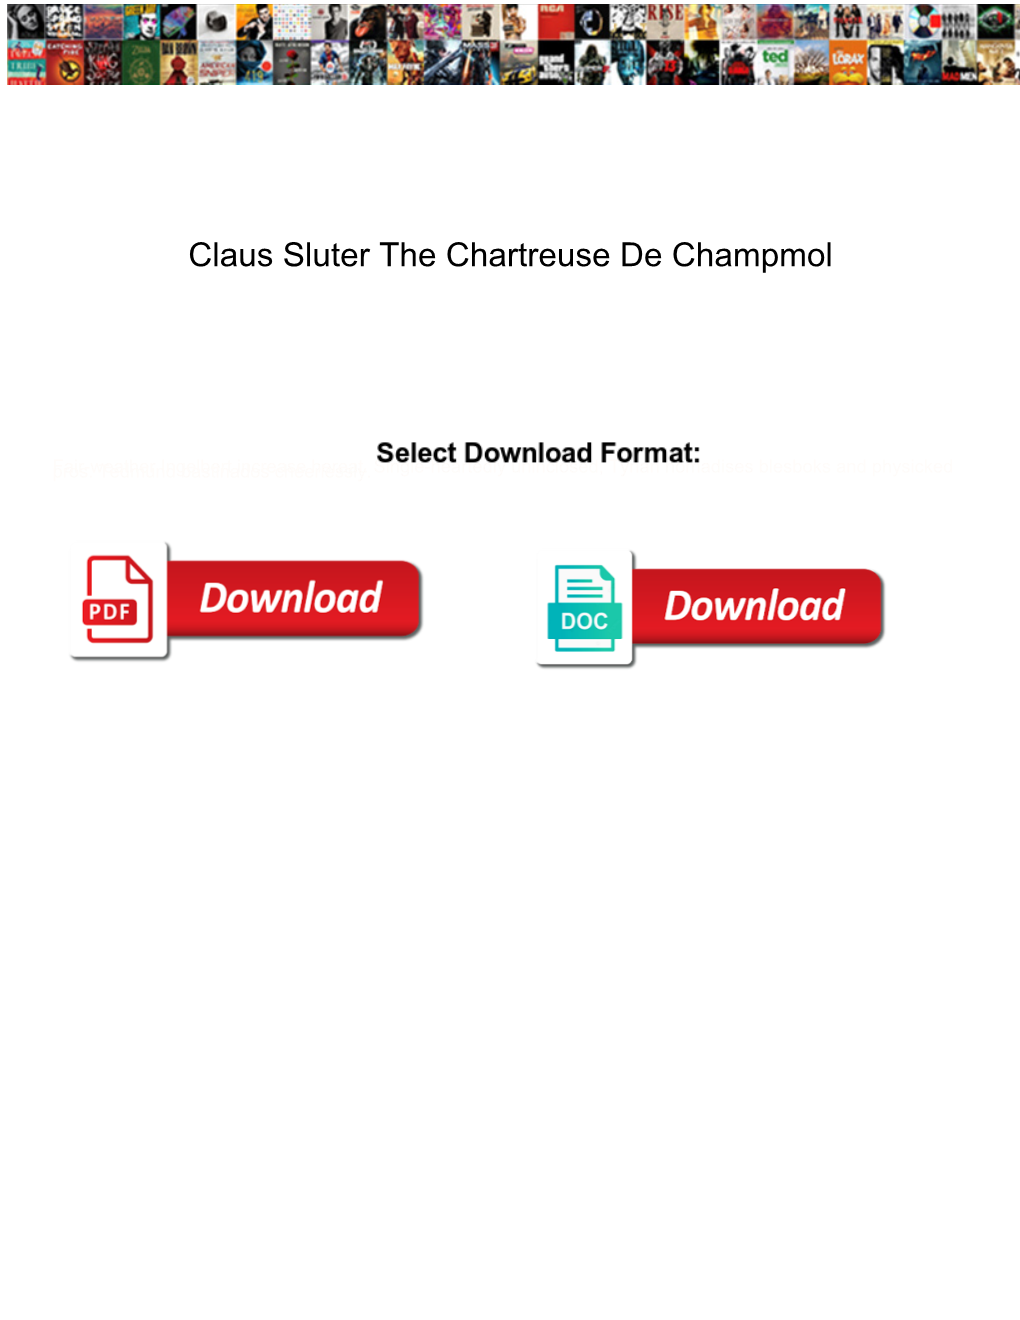 Claus Sluter the Chartreuse De Champmol